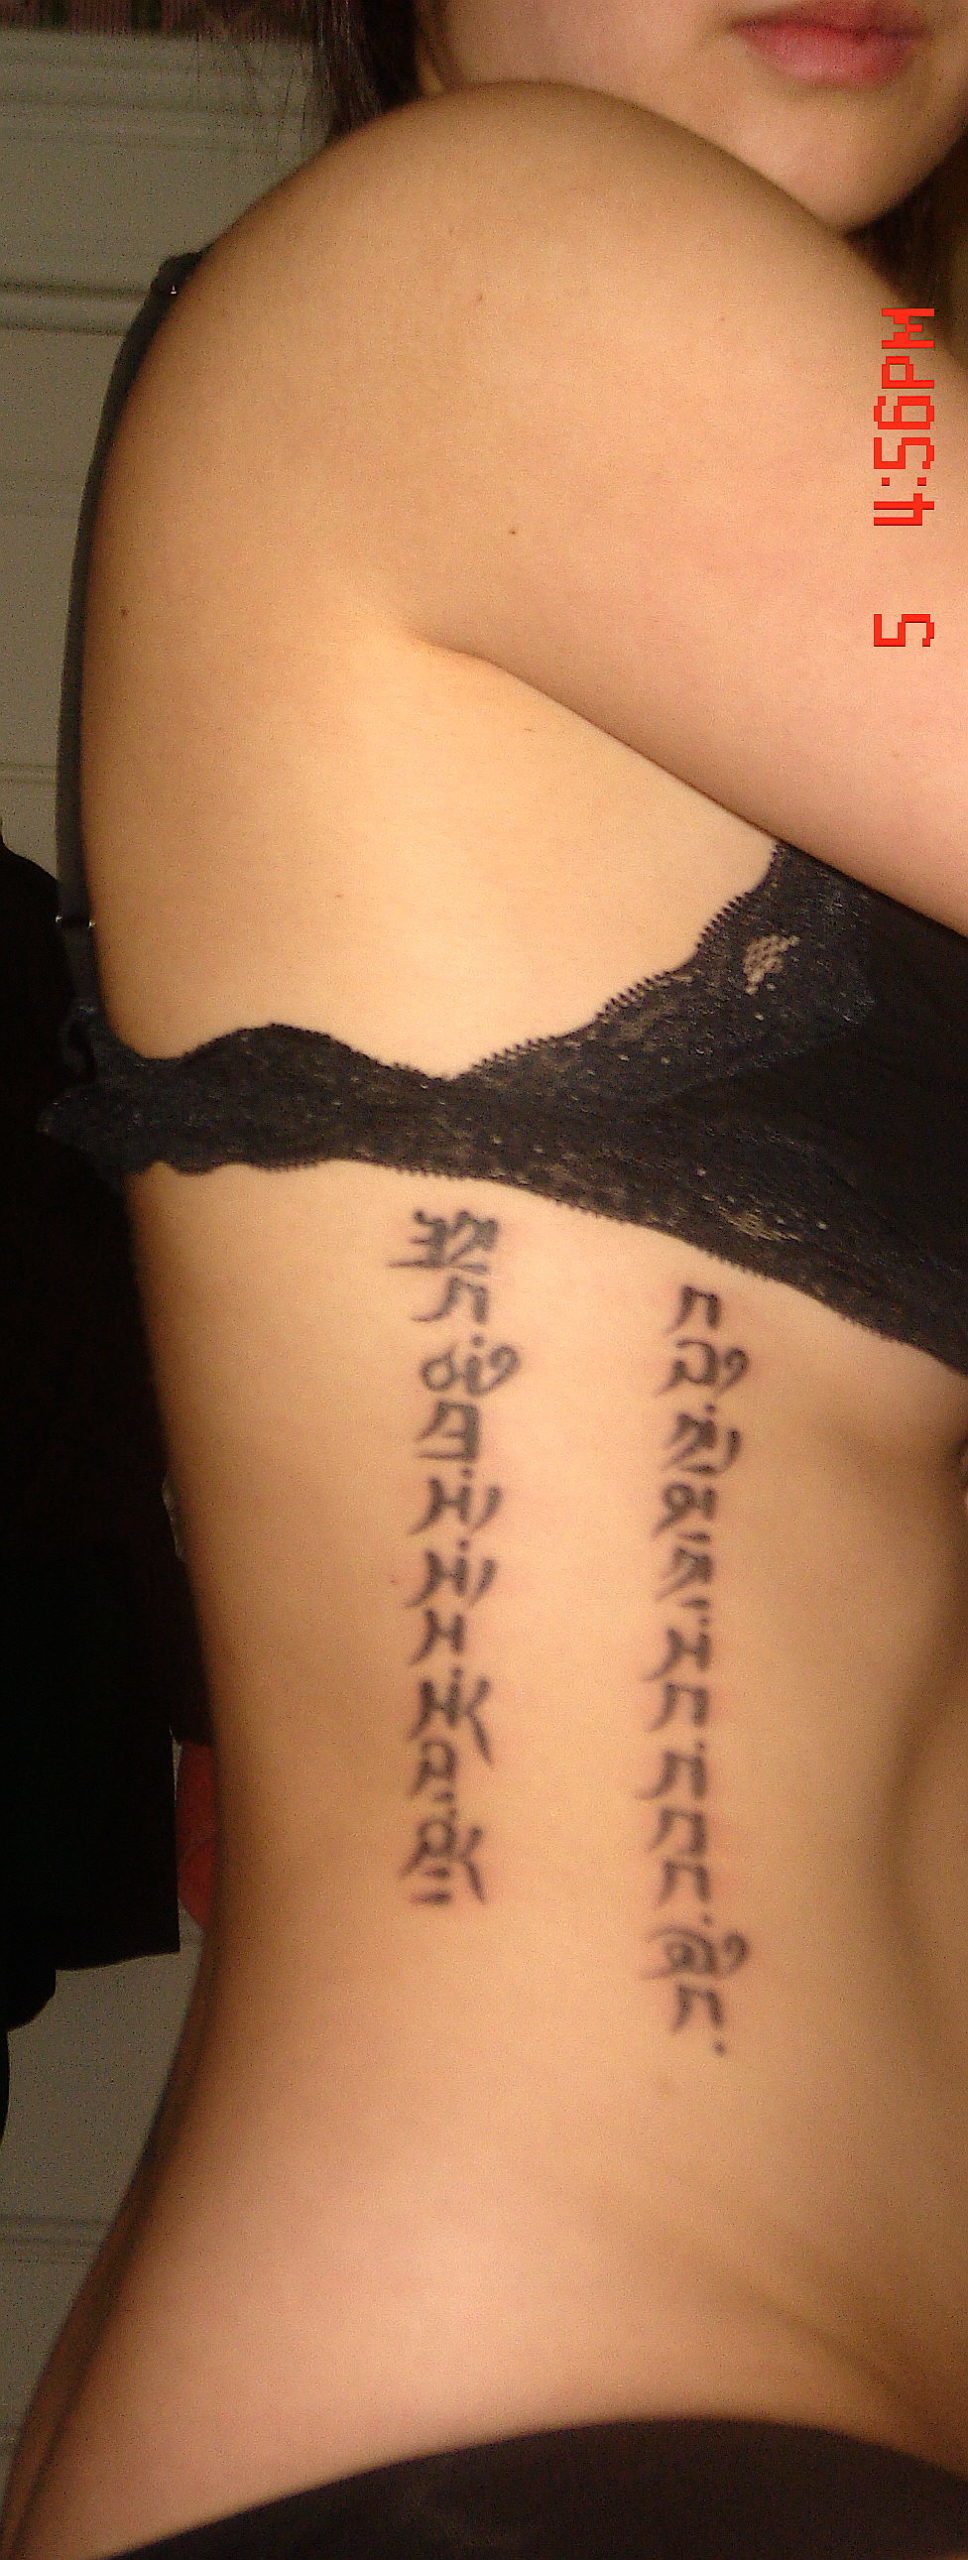 tattoo-inked-girls-tibetan-ink-skin-ink-tattoo-tattooed-lettering-inked-skin-tibetan-translation-script-ink-tattoo-design-skin-tibetan-tattoo-td-rang-dbang-etc-vert-3